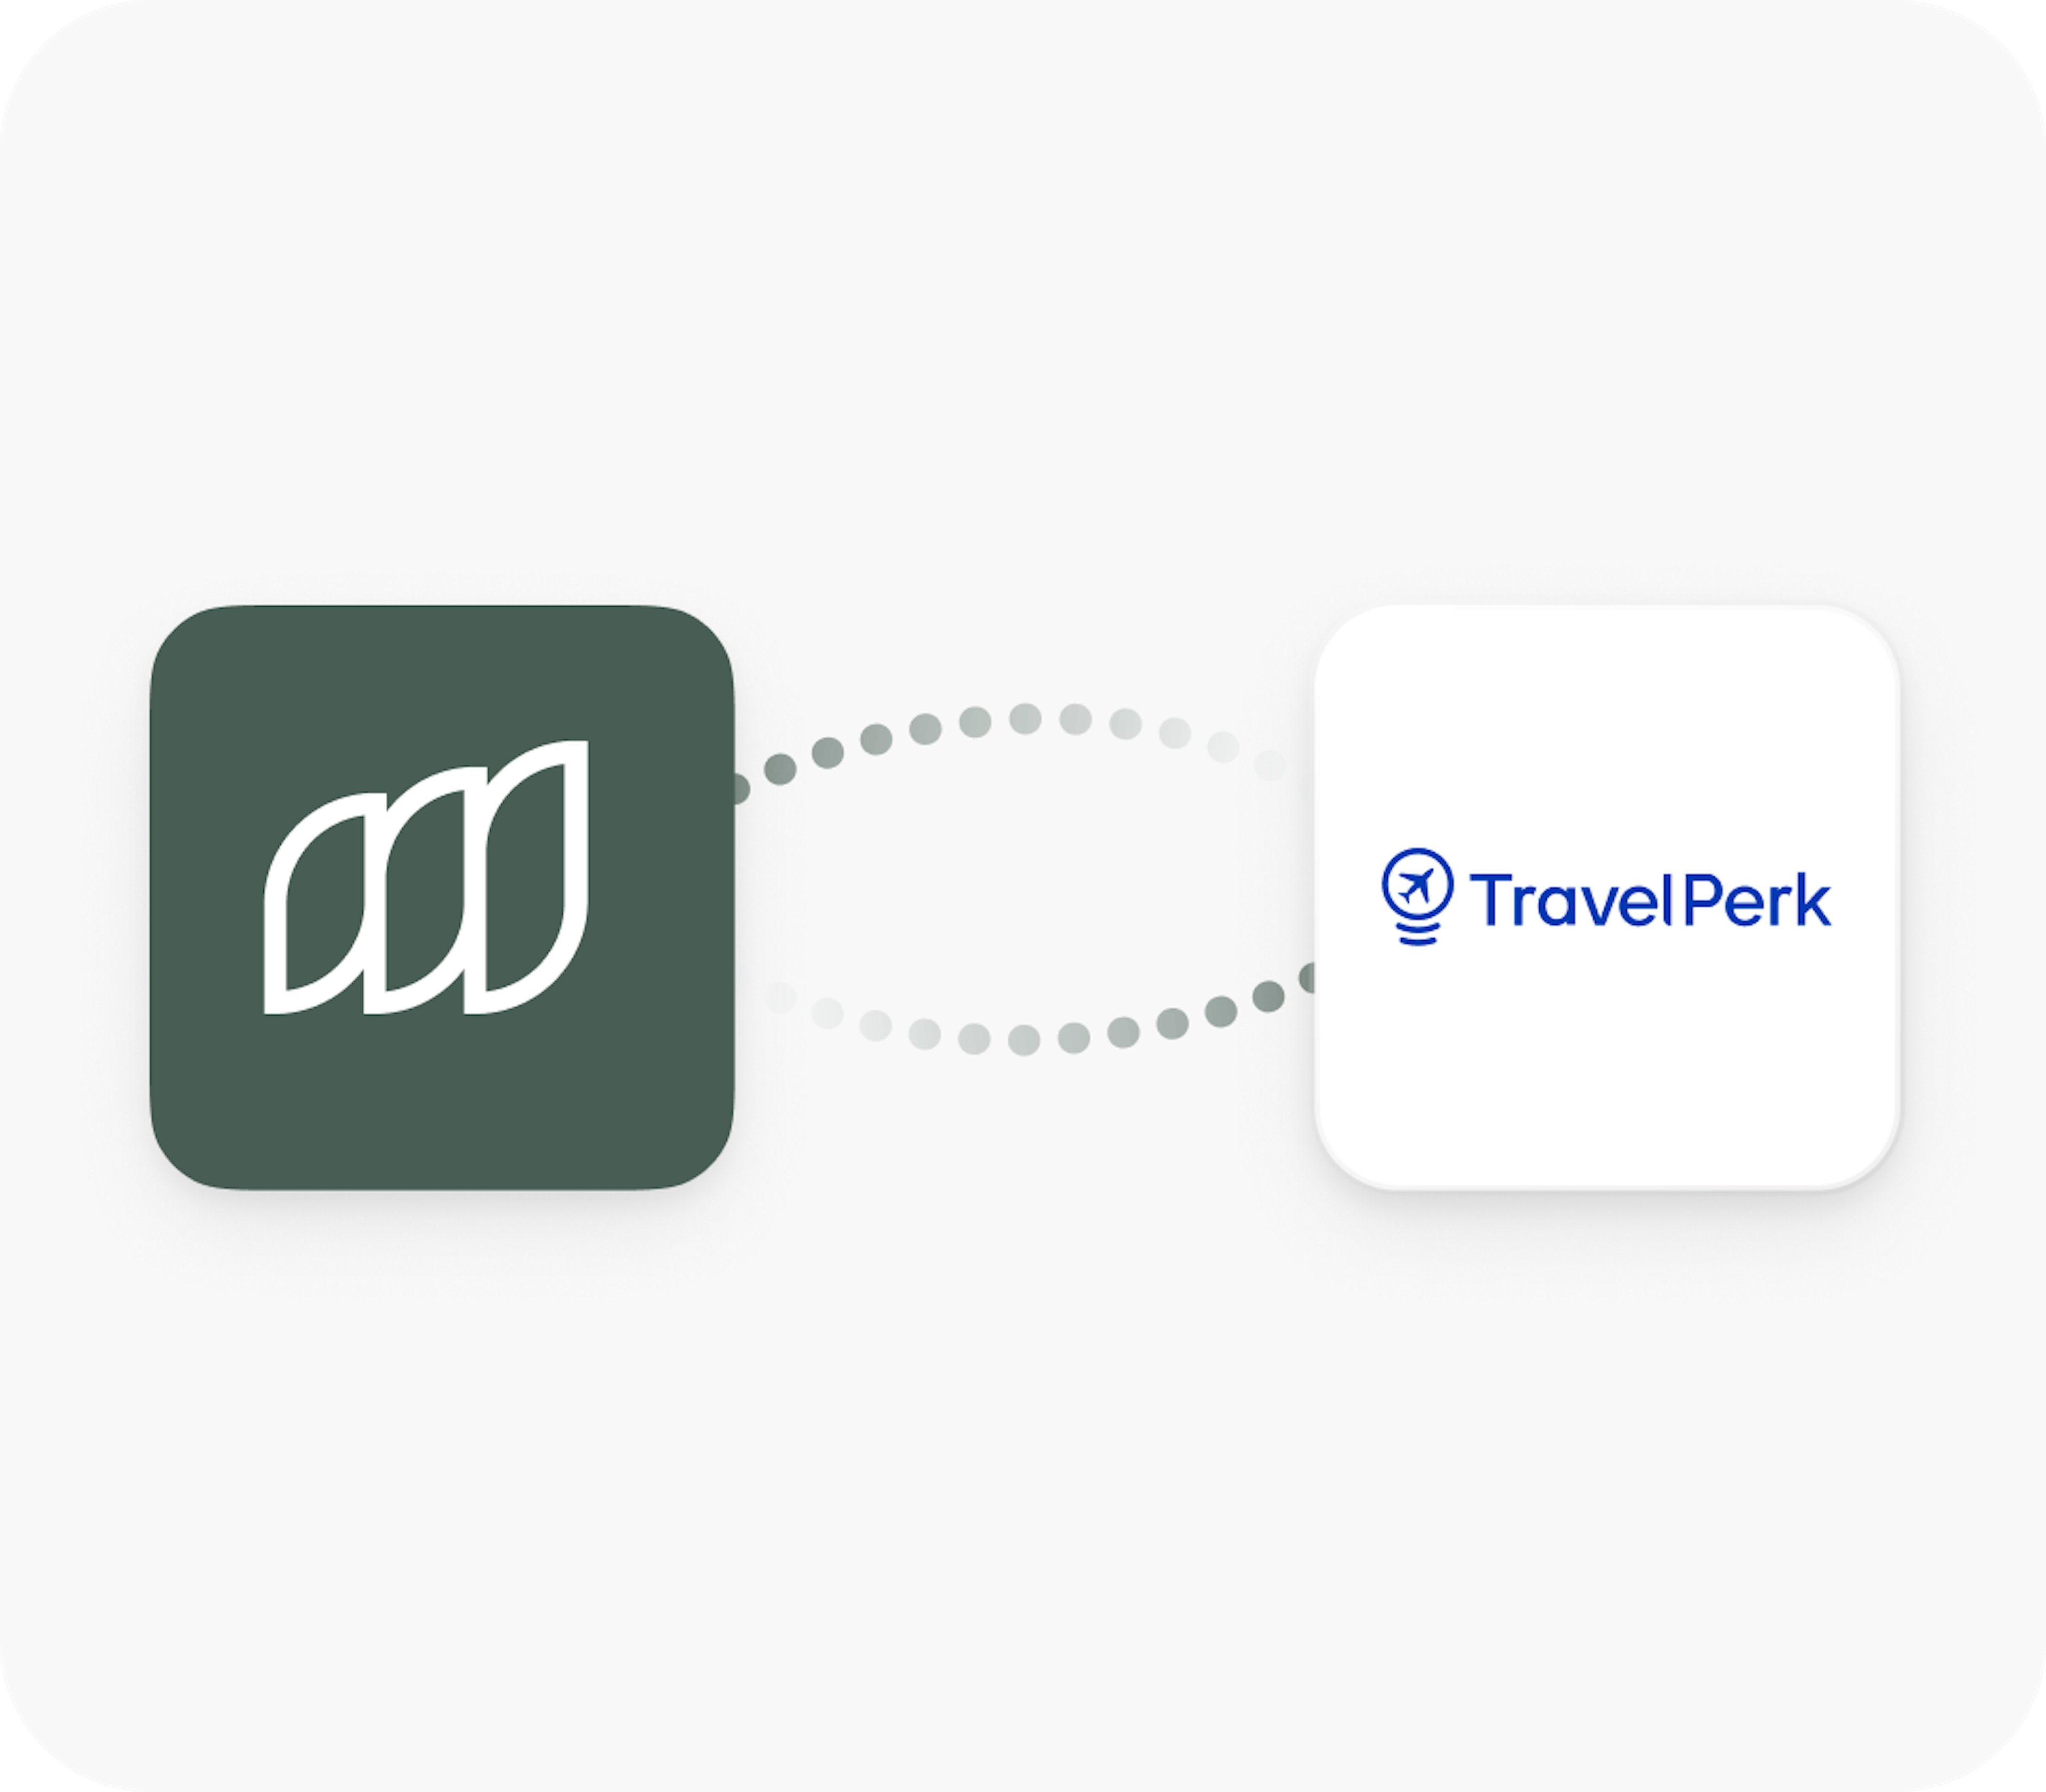 Moss and Travelperk logos